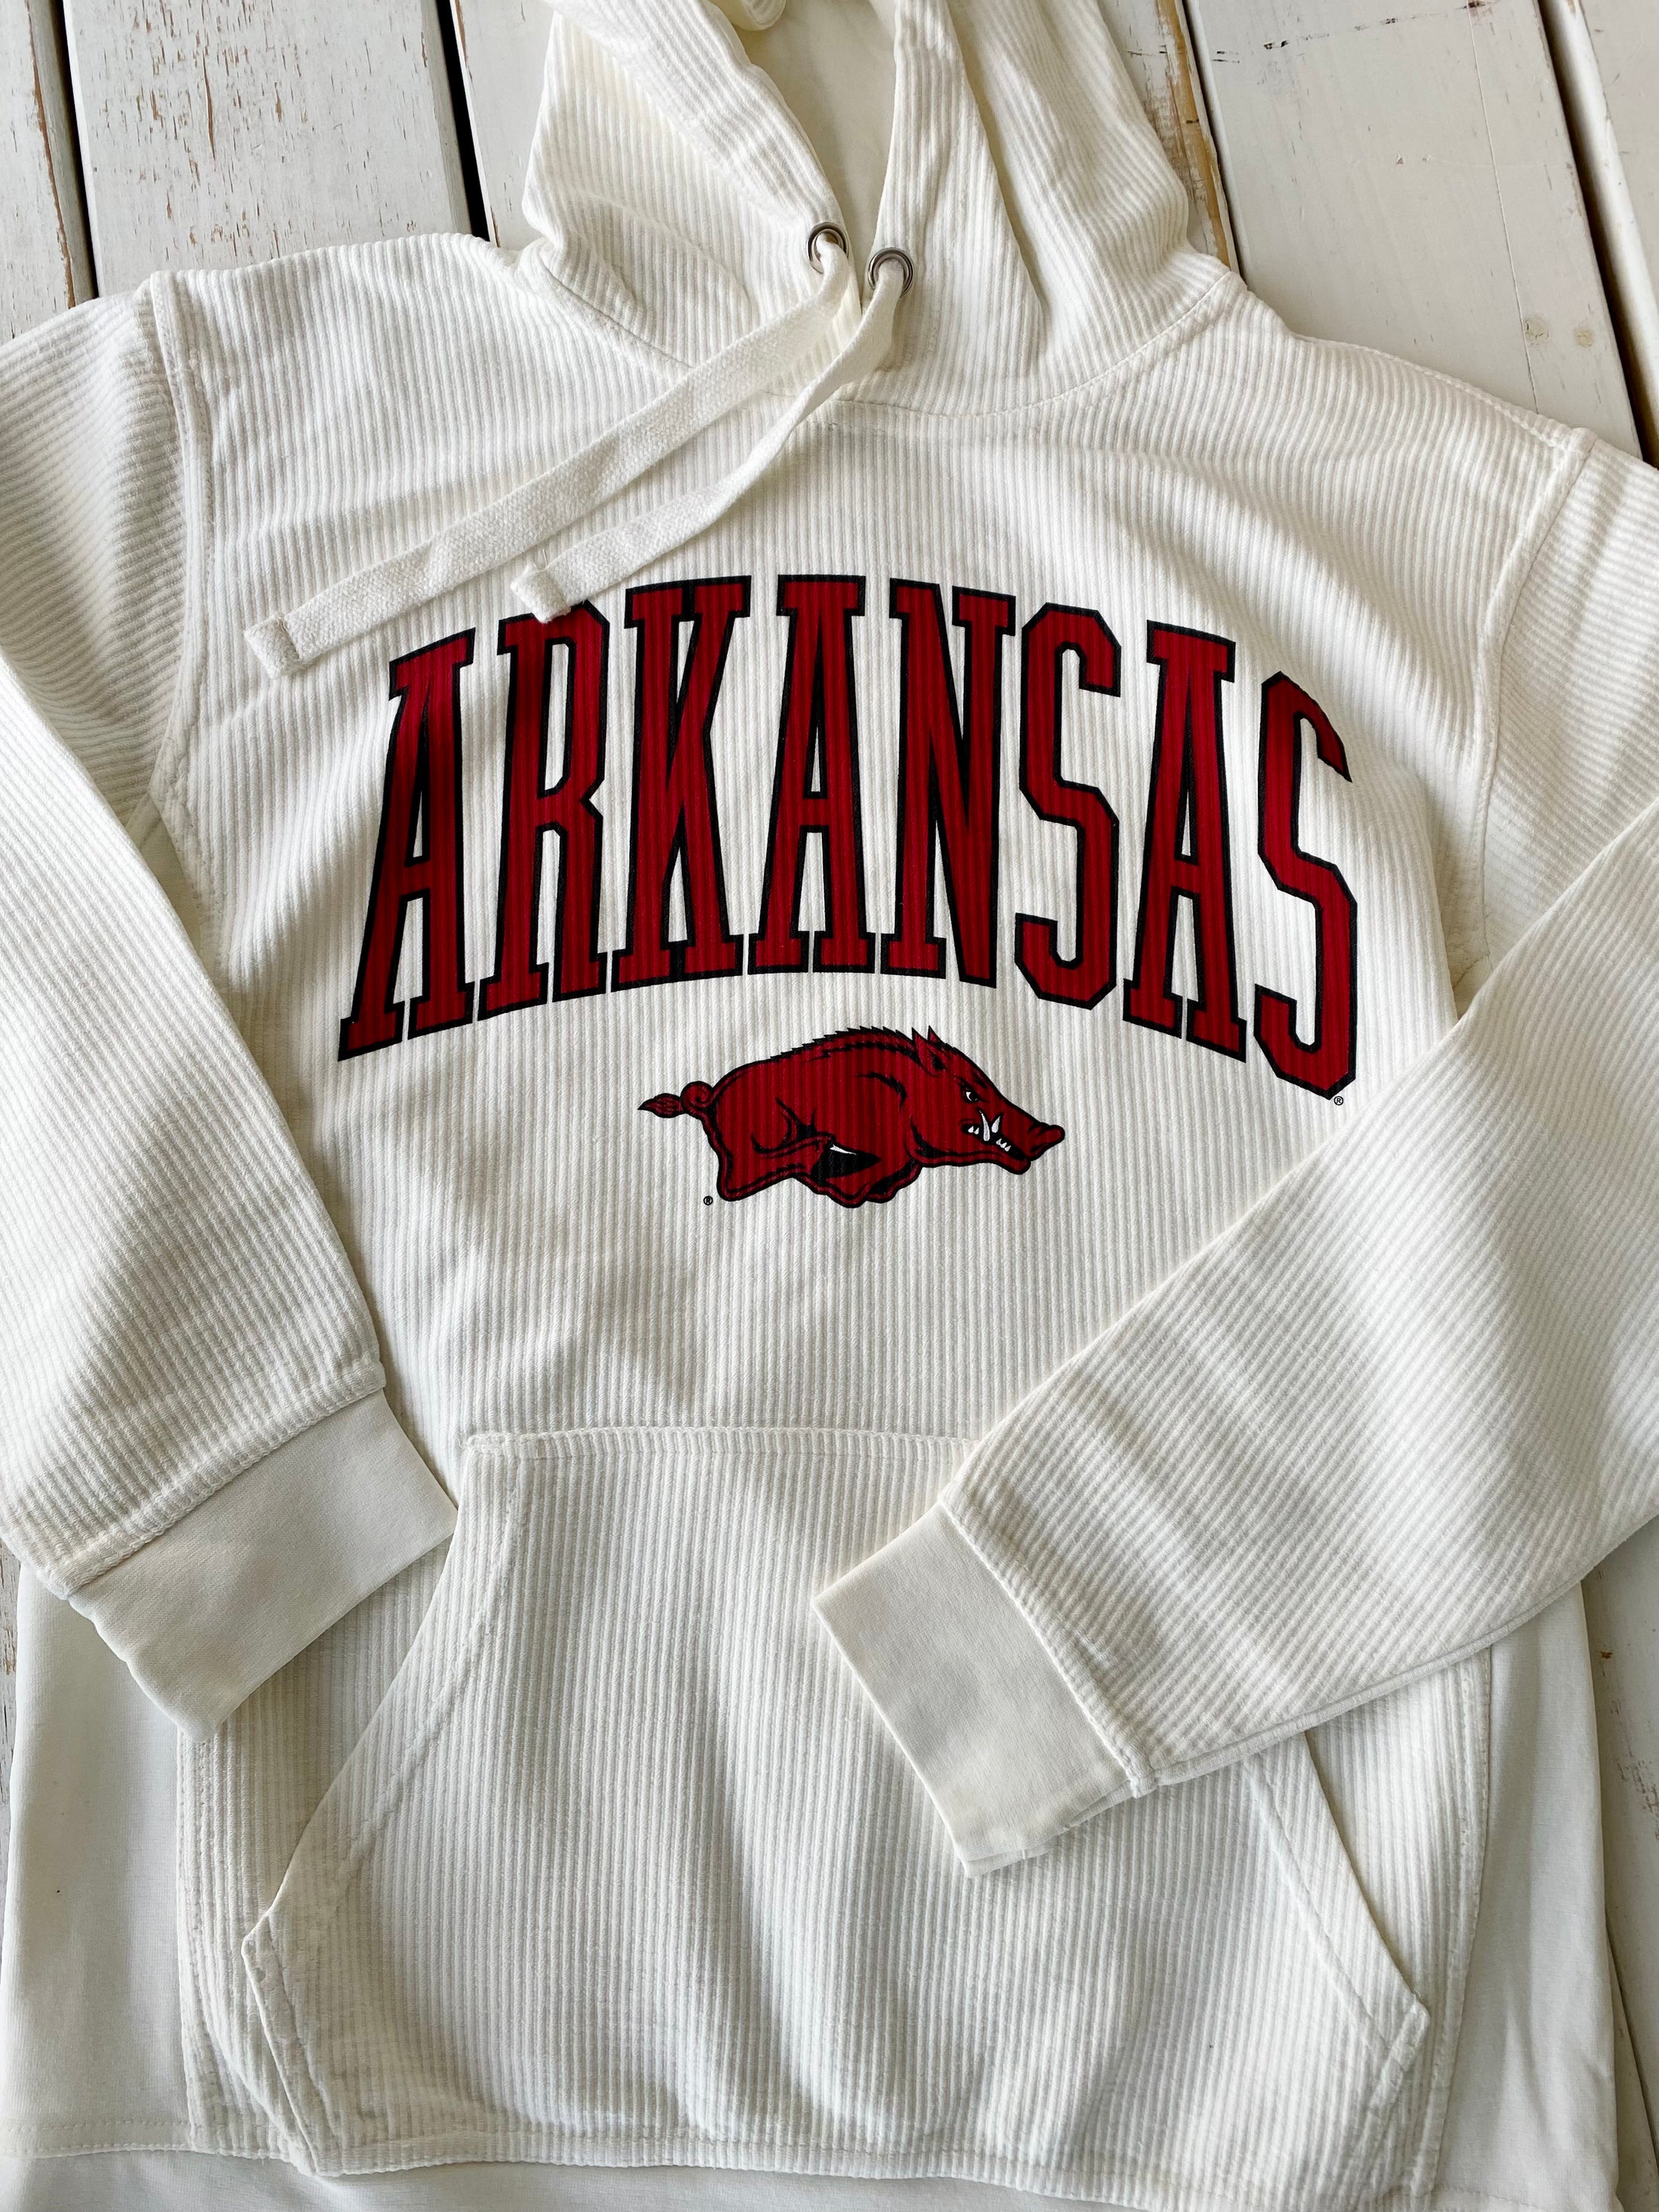 Hog Wild Arkansas Razorback Hoodie - Ivory Corded Sweatshirt